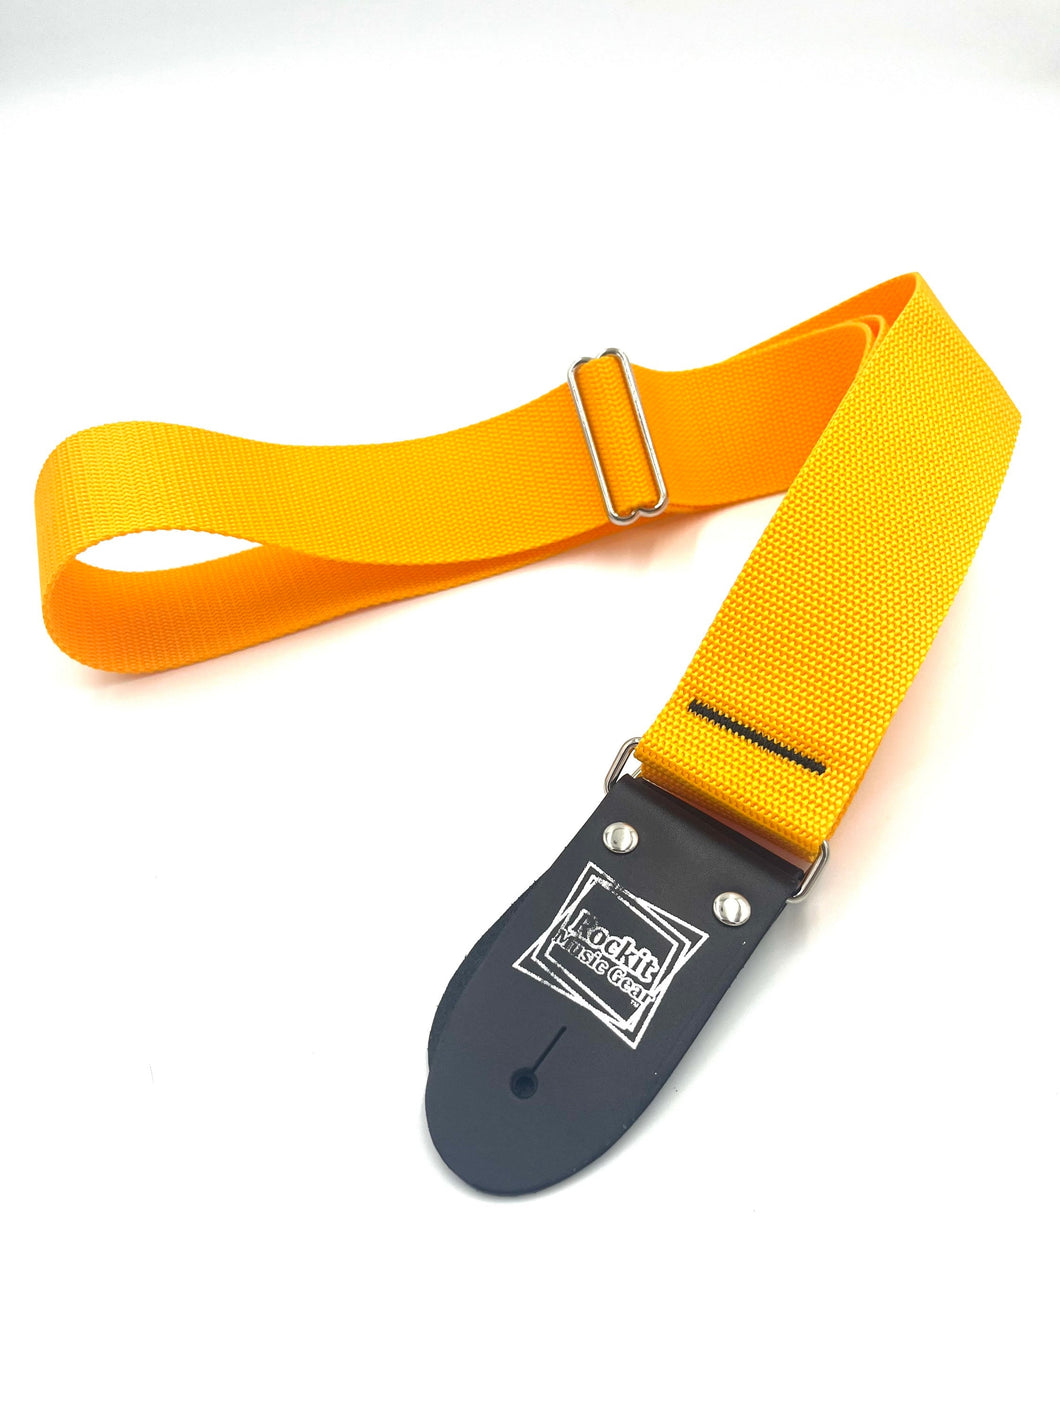 Rockit Music Gear 2 Inch Polypro Guitar Strap - Yellow/Orange